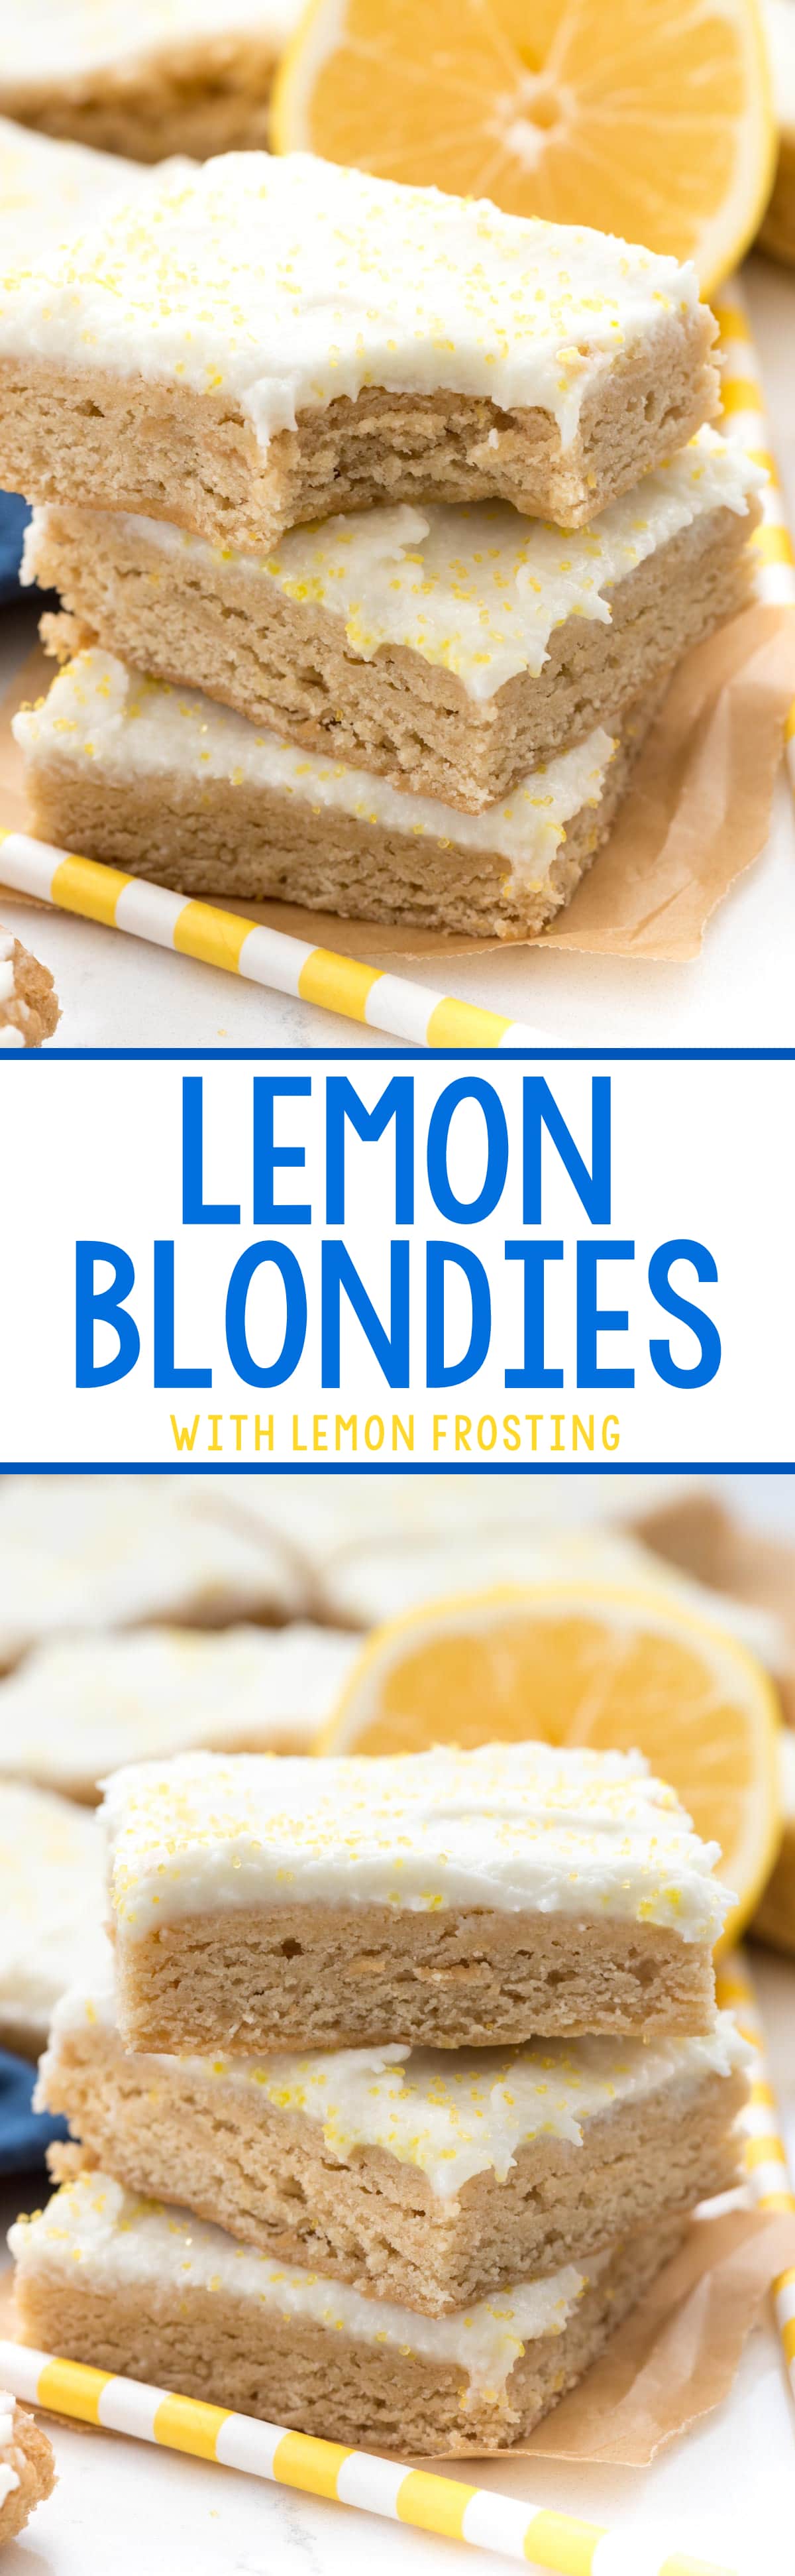 Lemon Blondies - this easy blondie recipe is FULL of lemon flavor and iced with an easy lemon frosting!